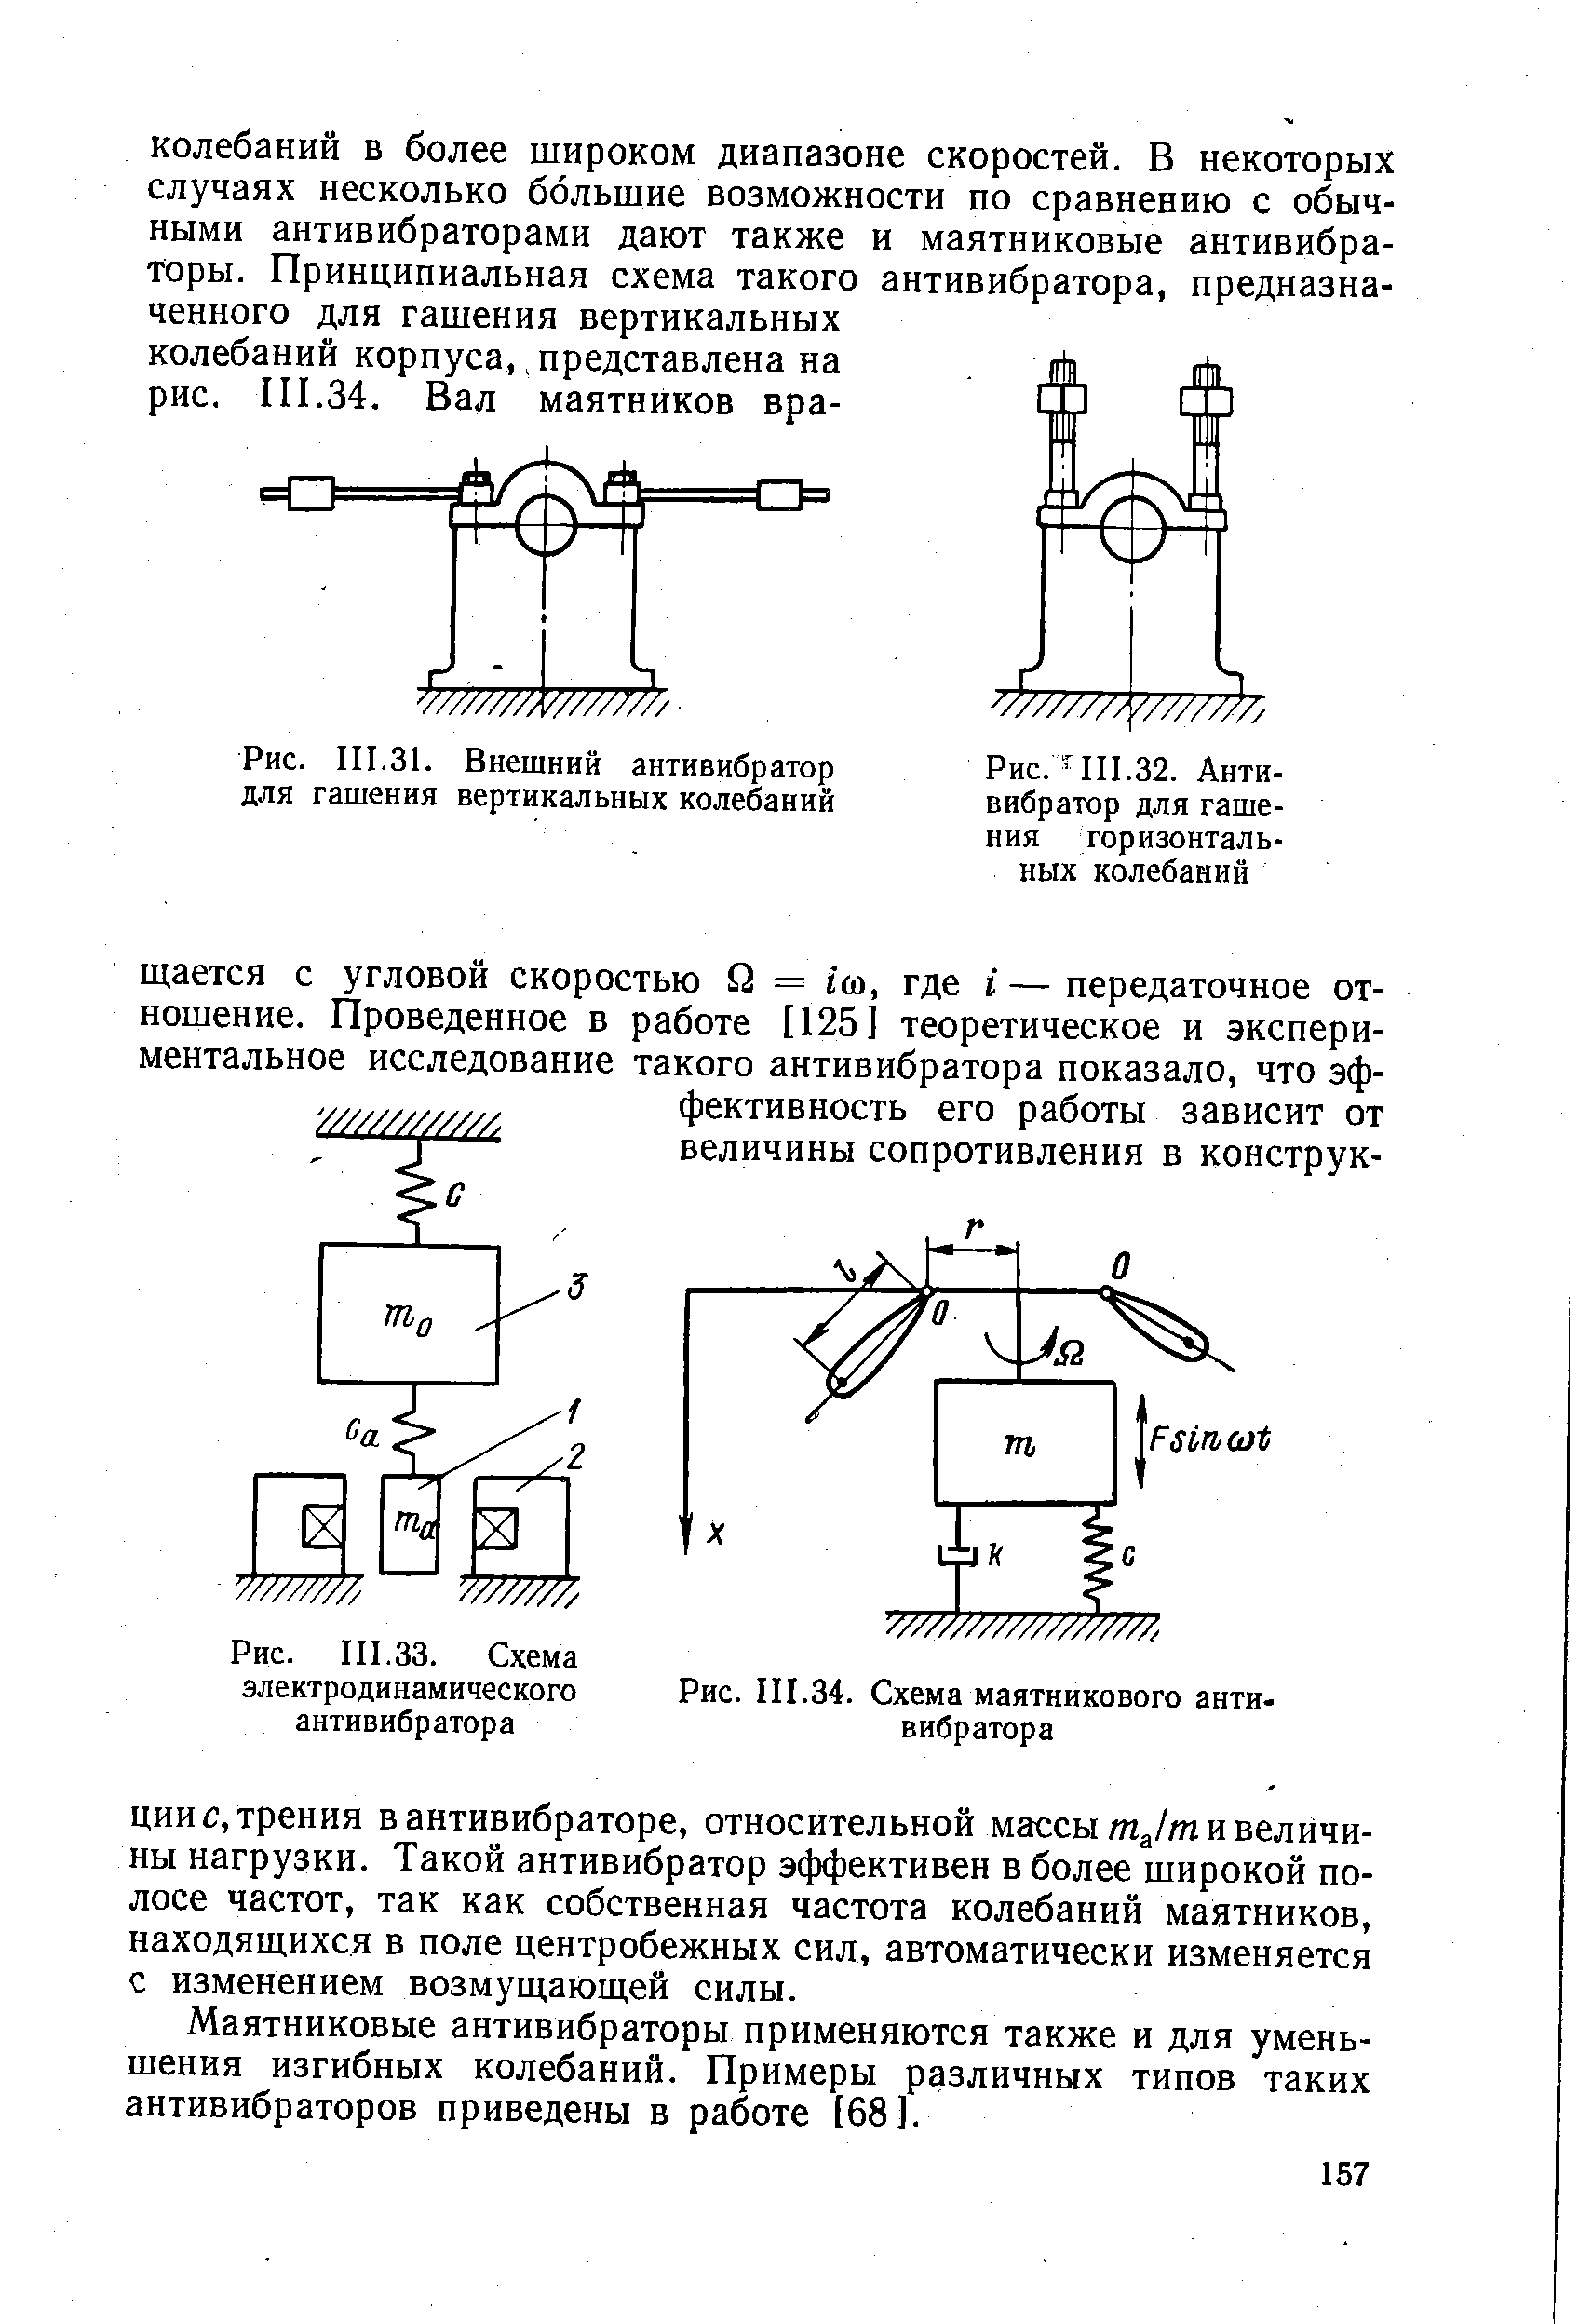 Рис. III.33. Схема электродинамического антивибратора
